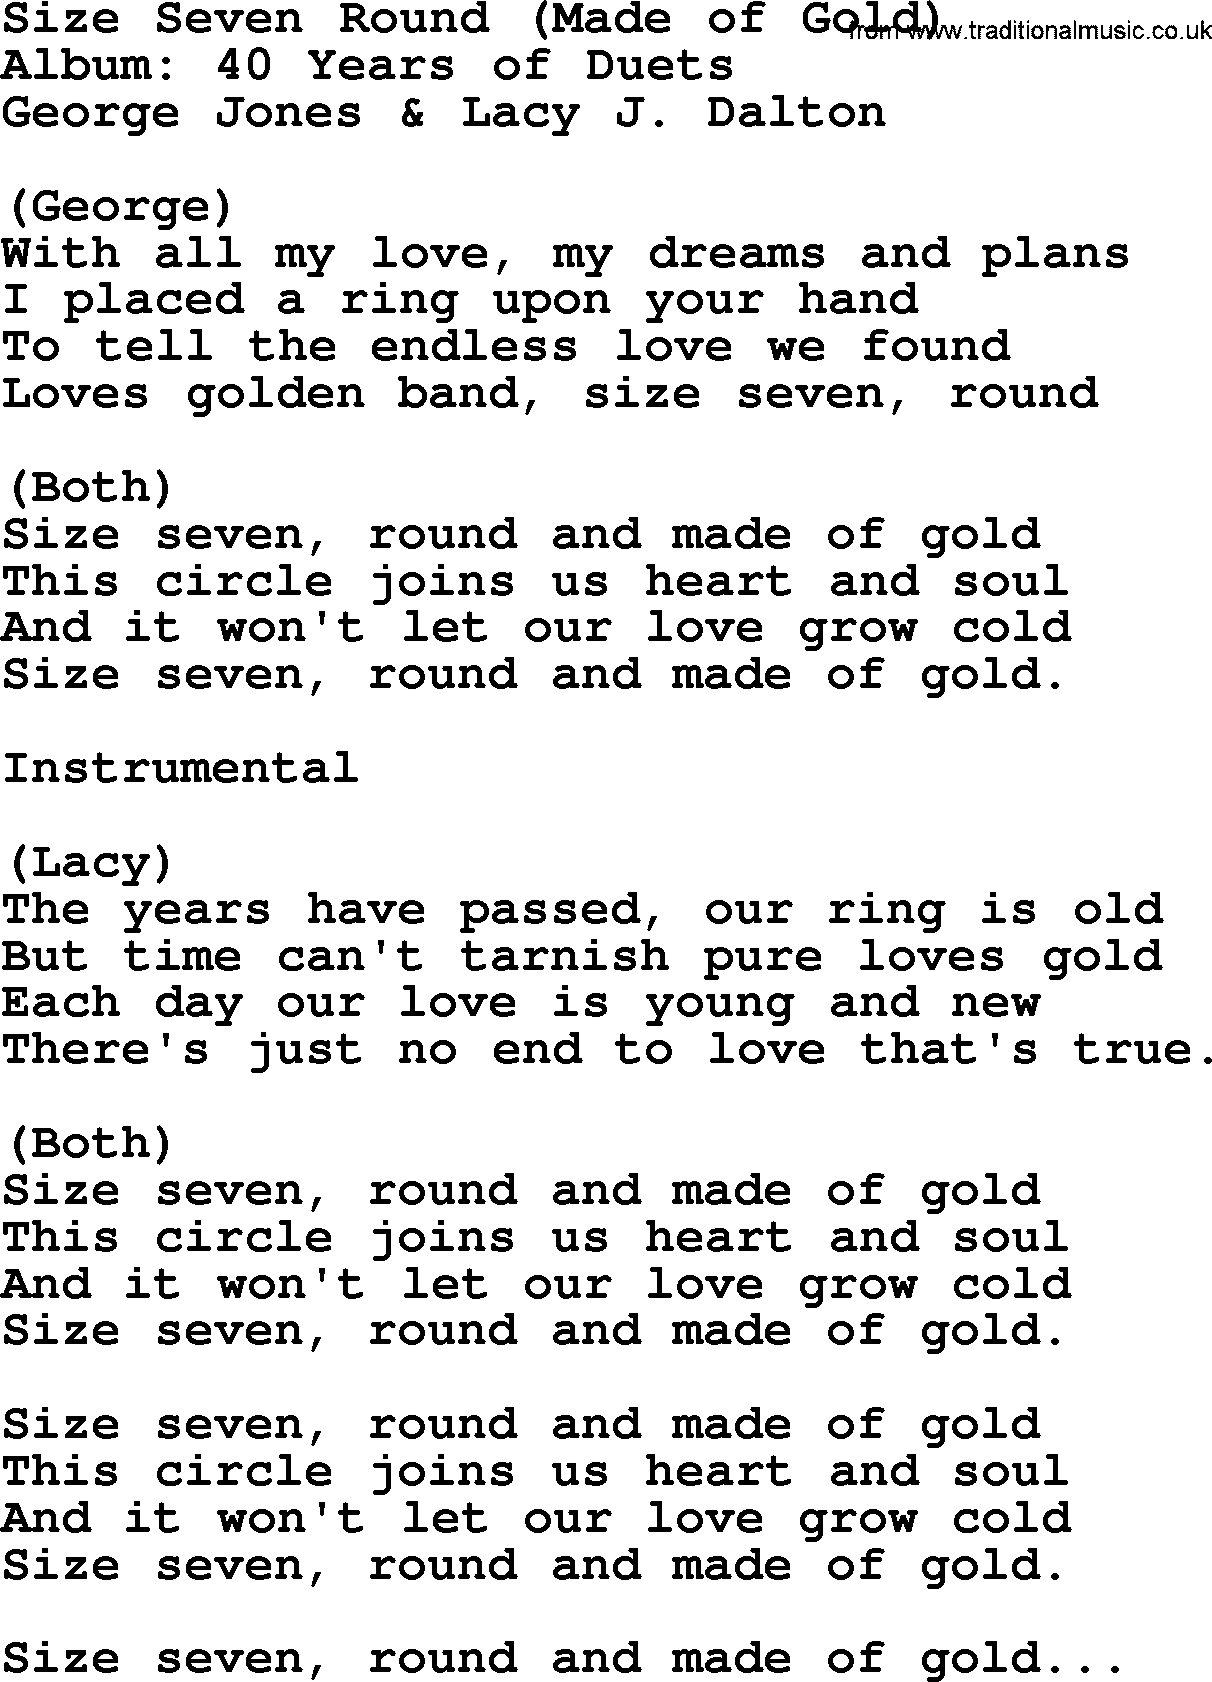 George Jones song: Size Seven Round (made Of Gold), lyrics